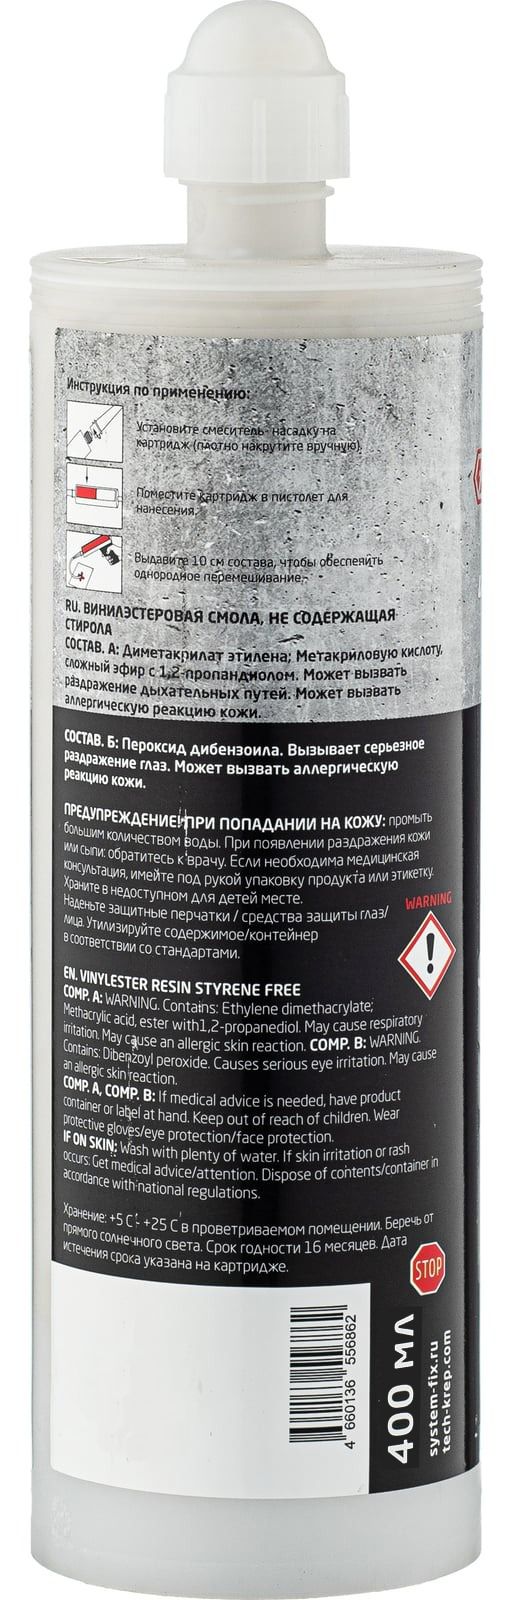 Химический анкер на основе винилэстера зимний TECH-KREP TIT VE-200 PRO ARCTIC NEW, 400 мл - фото